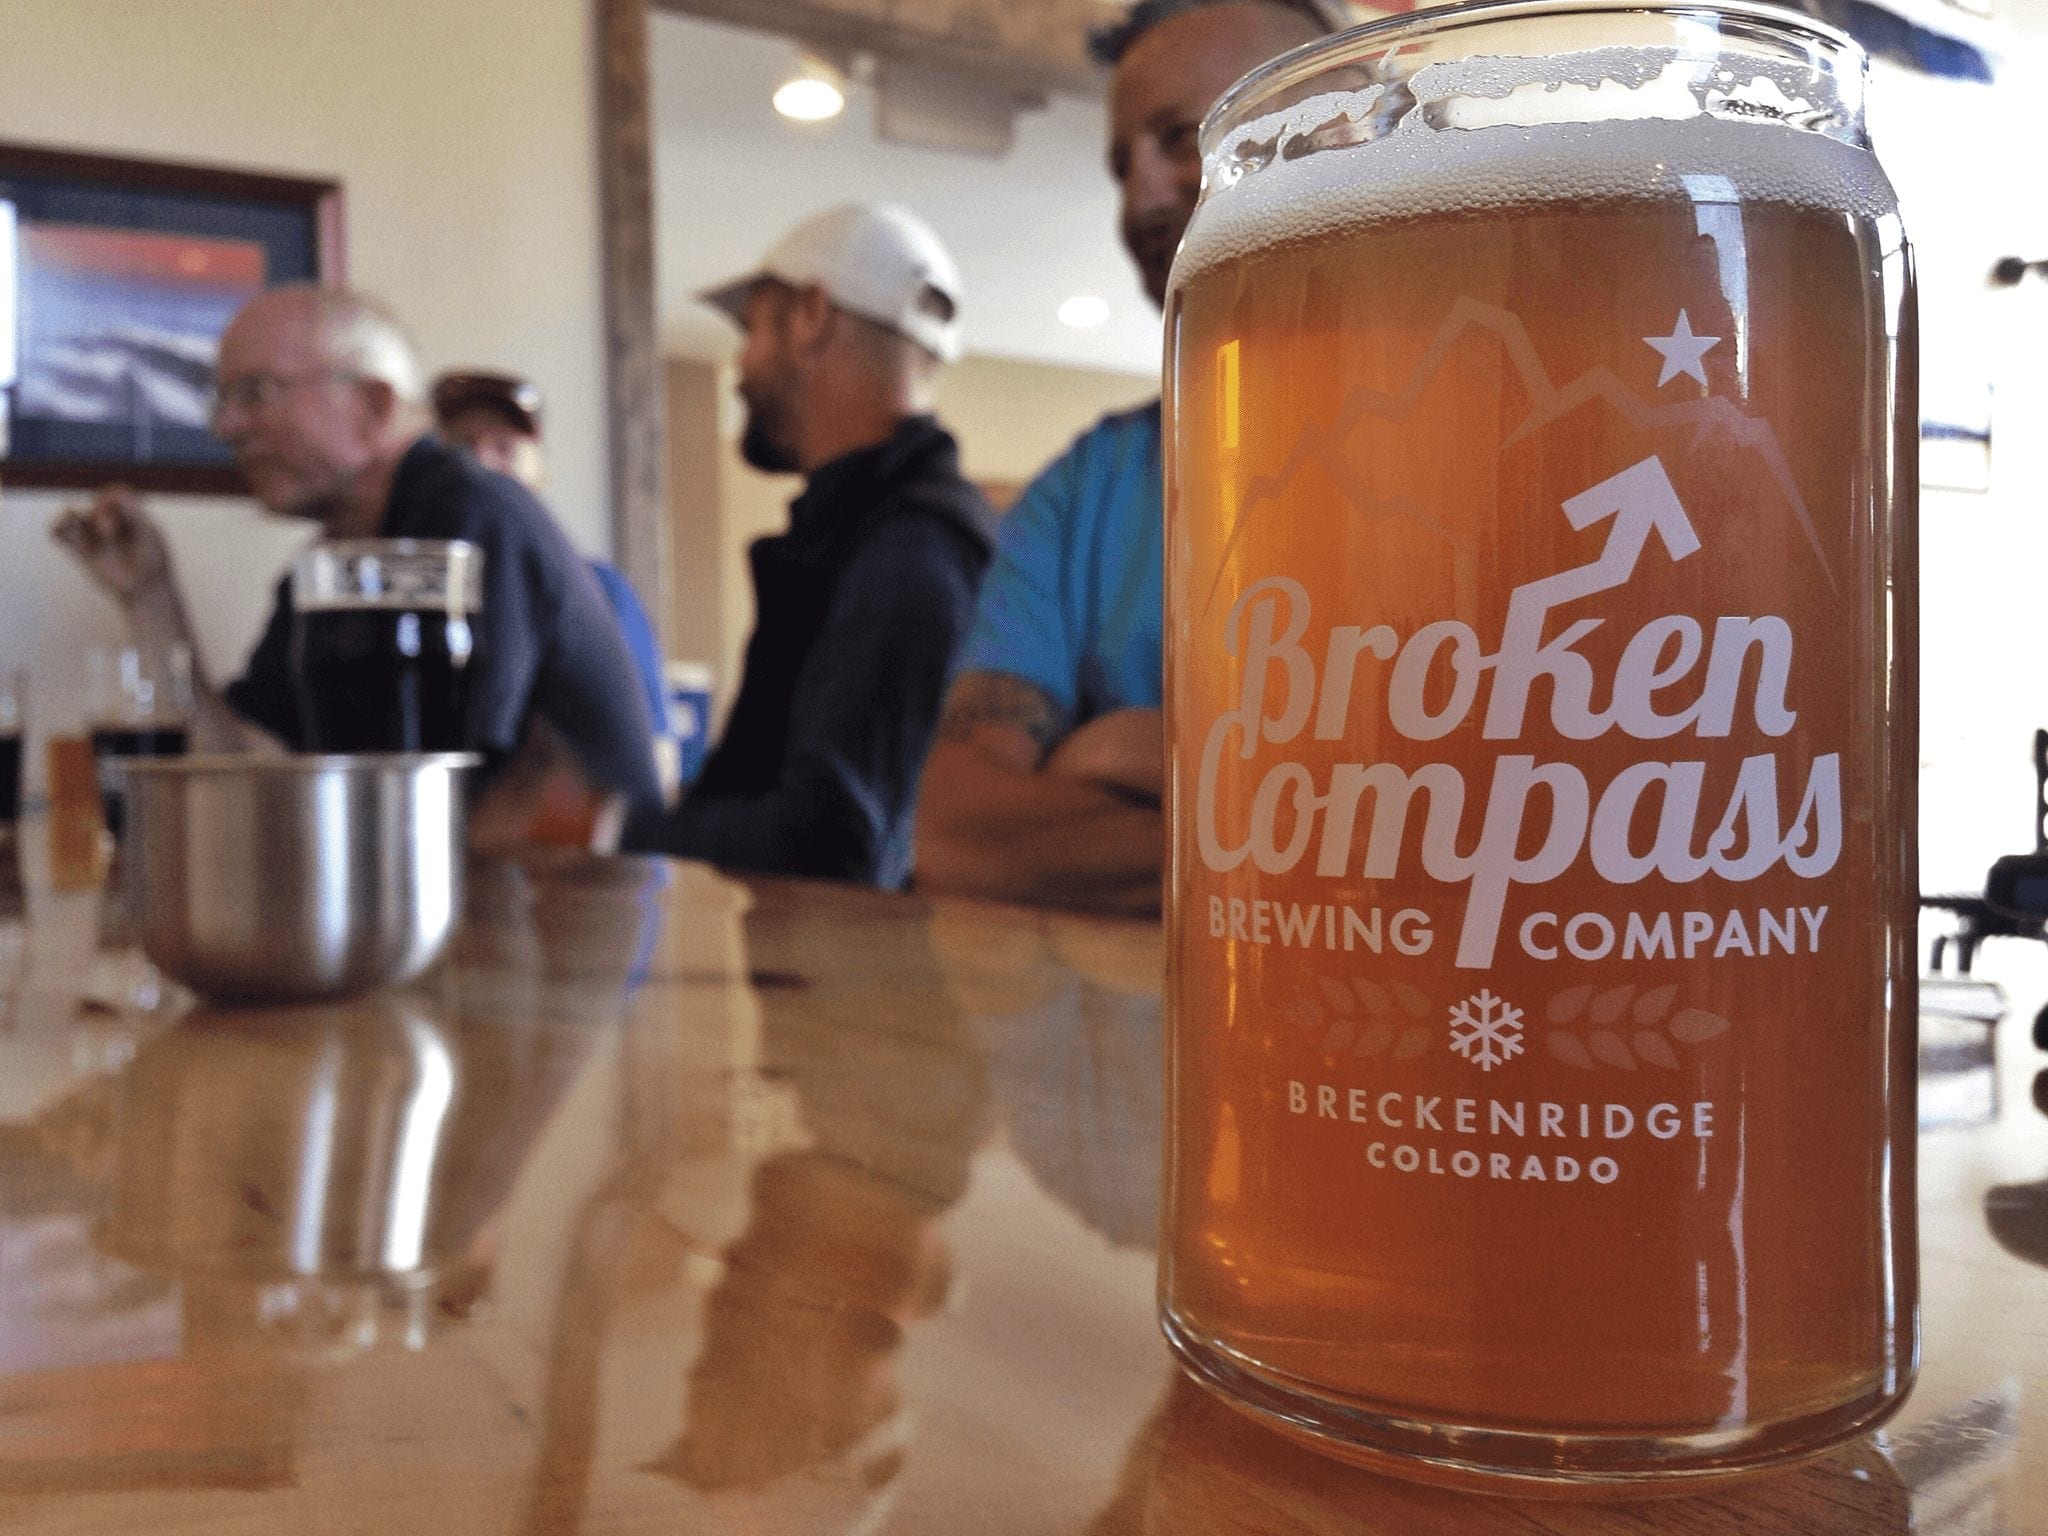 Glass of beer at Broken Compass Brewing Company in Breckenridge